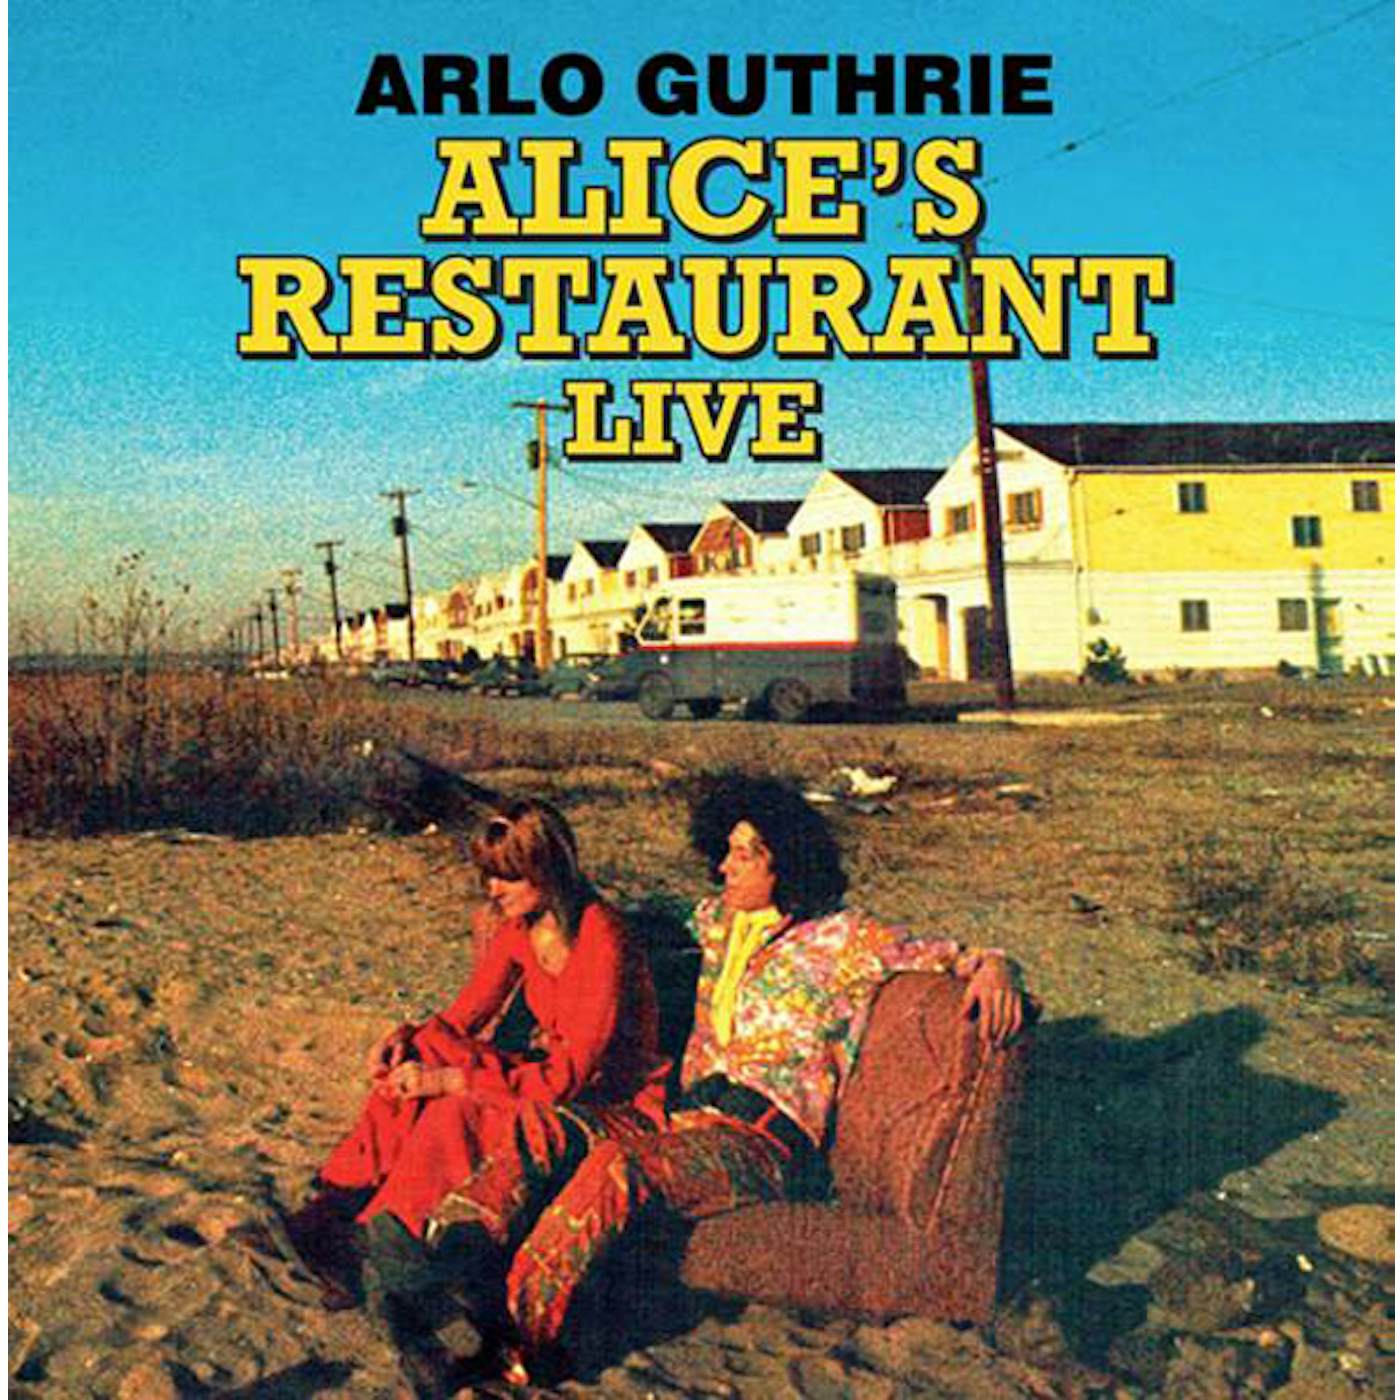 Arlo Guthrie ALICE'S RESTAURANT LIVE CD